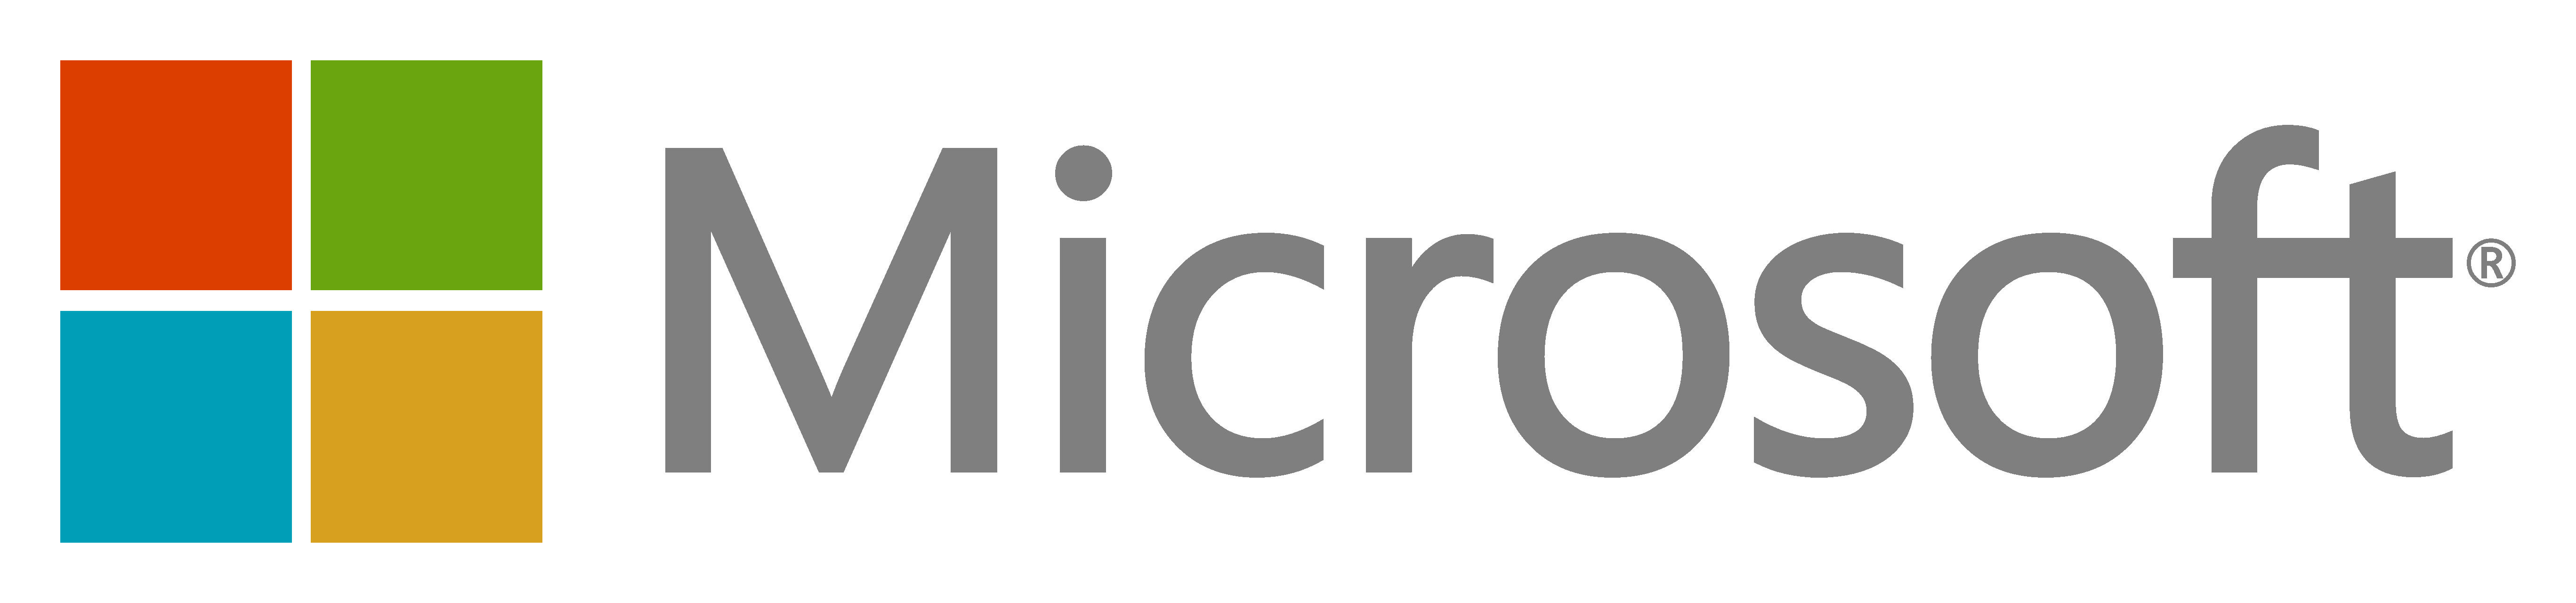 microsoft-logo-png-2396